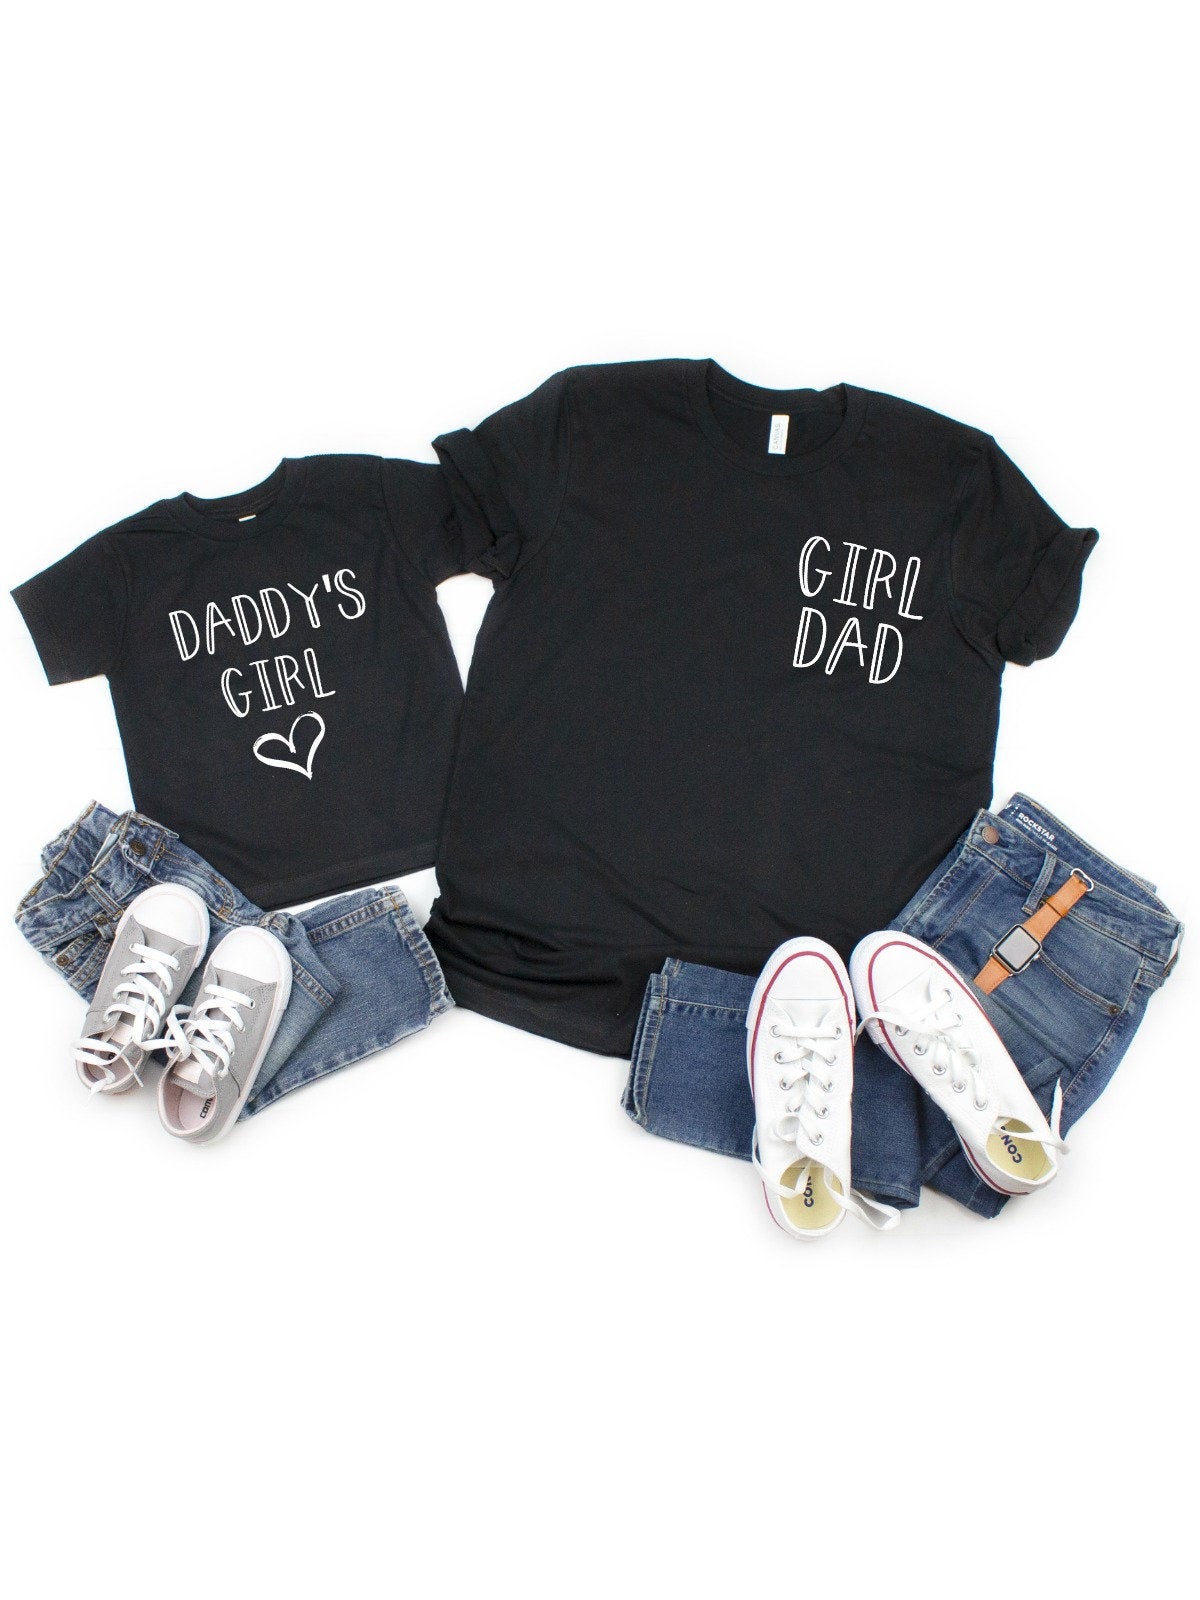 Daddy's Girl Matching Shirts- Black